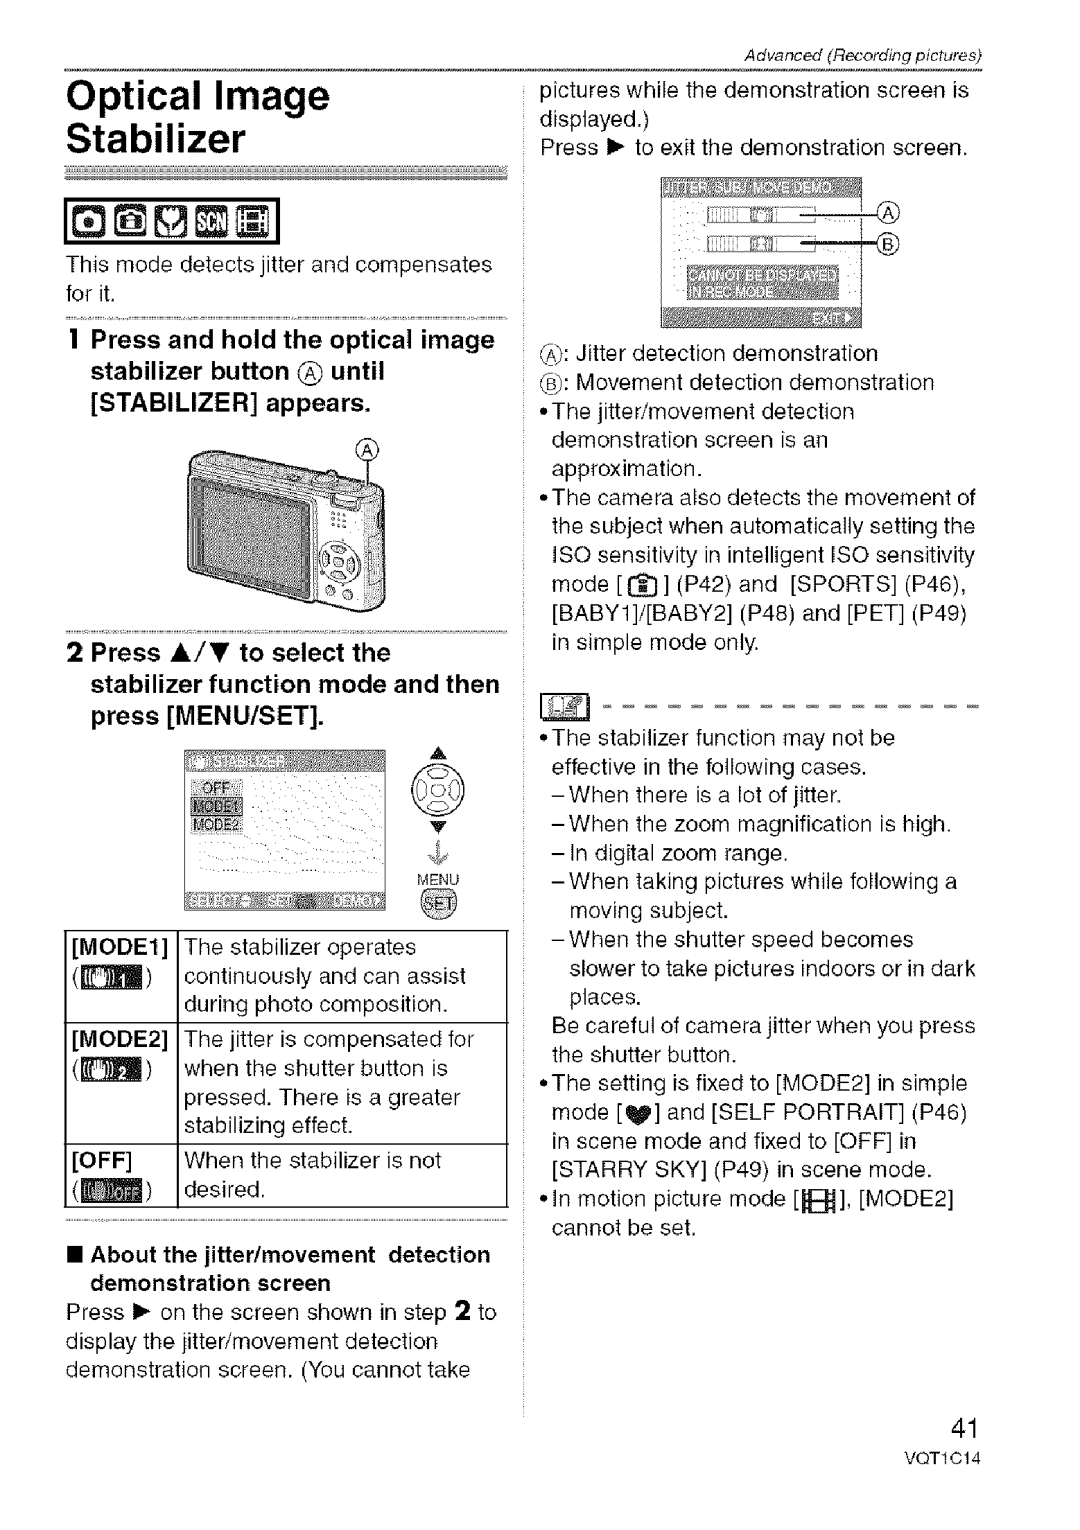 Panasonic DMC-FX10, DMC-FX12 Optical Image Stabilizer, Press To select Stabilizer function Mode Then, MODE1, MODE2 